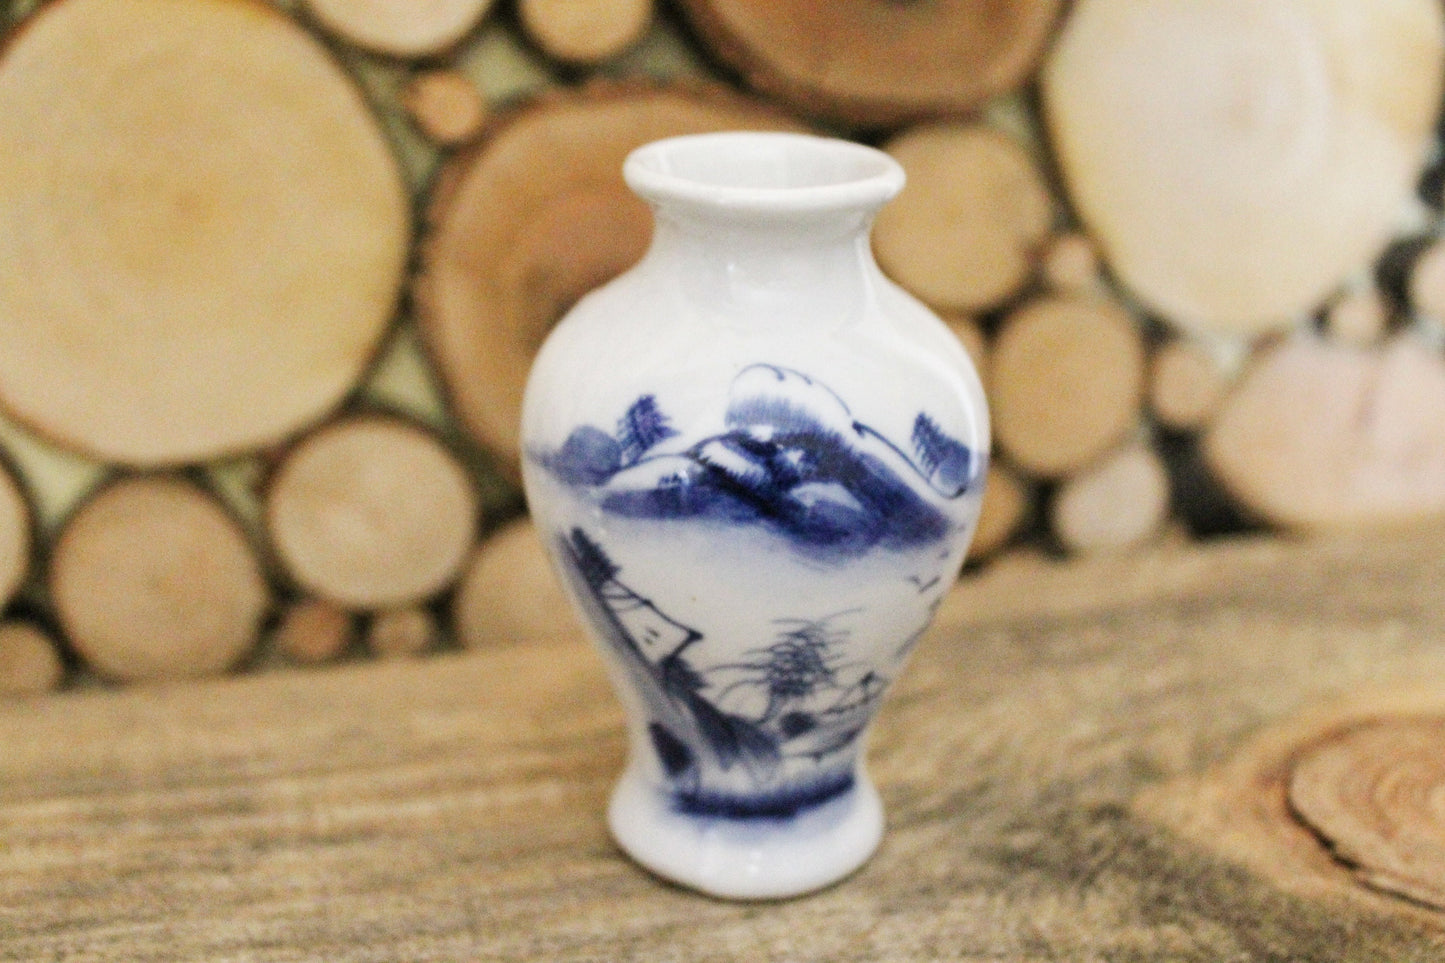 Vintage porcelain small vase 3.4 inches - made in Germany  - mini vase - cute vintage mini vase - 1960-1970s